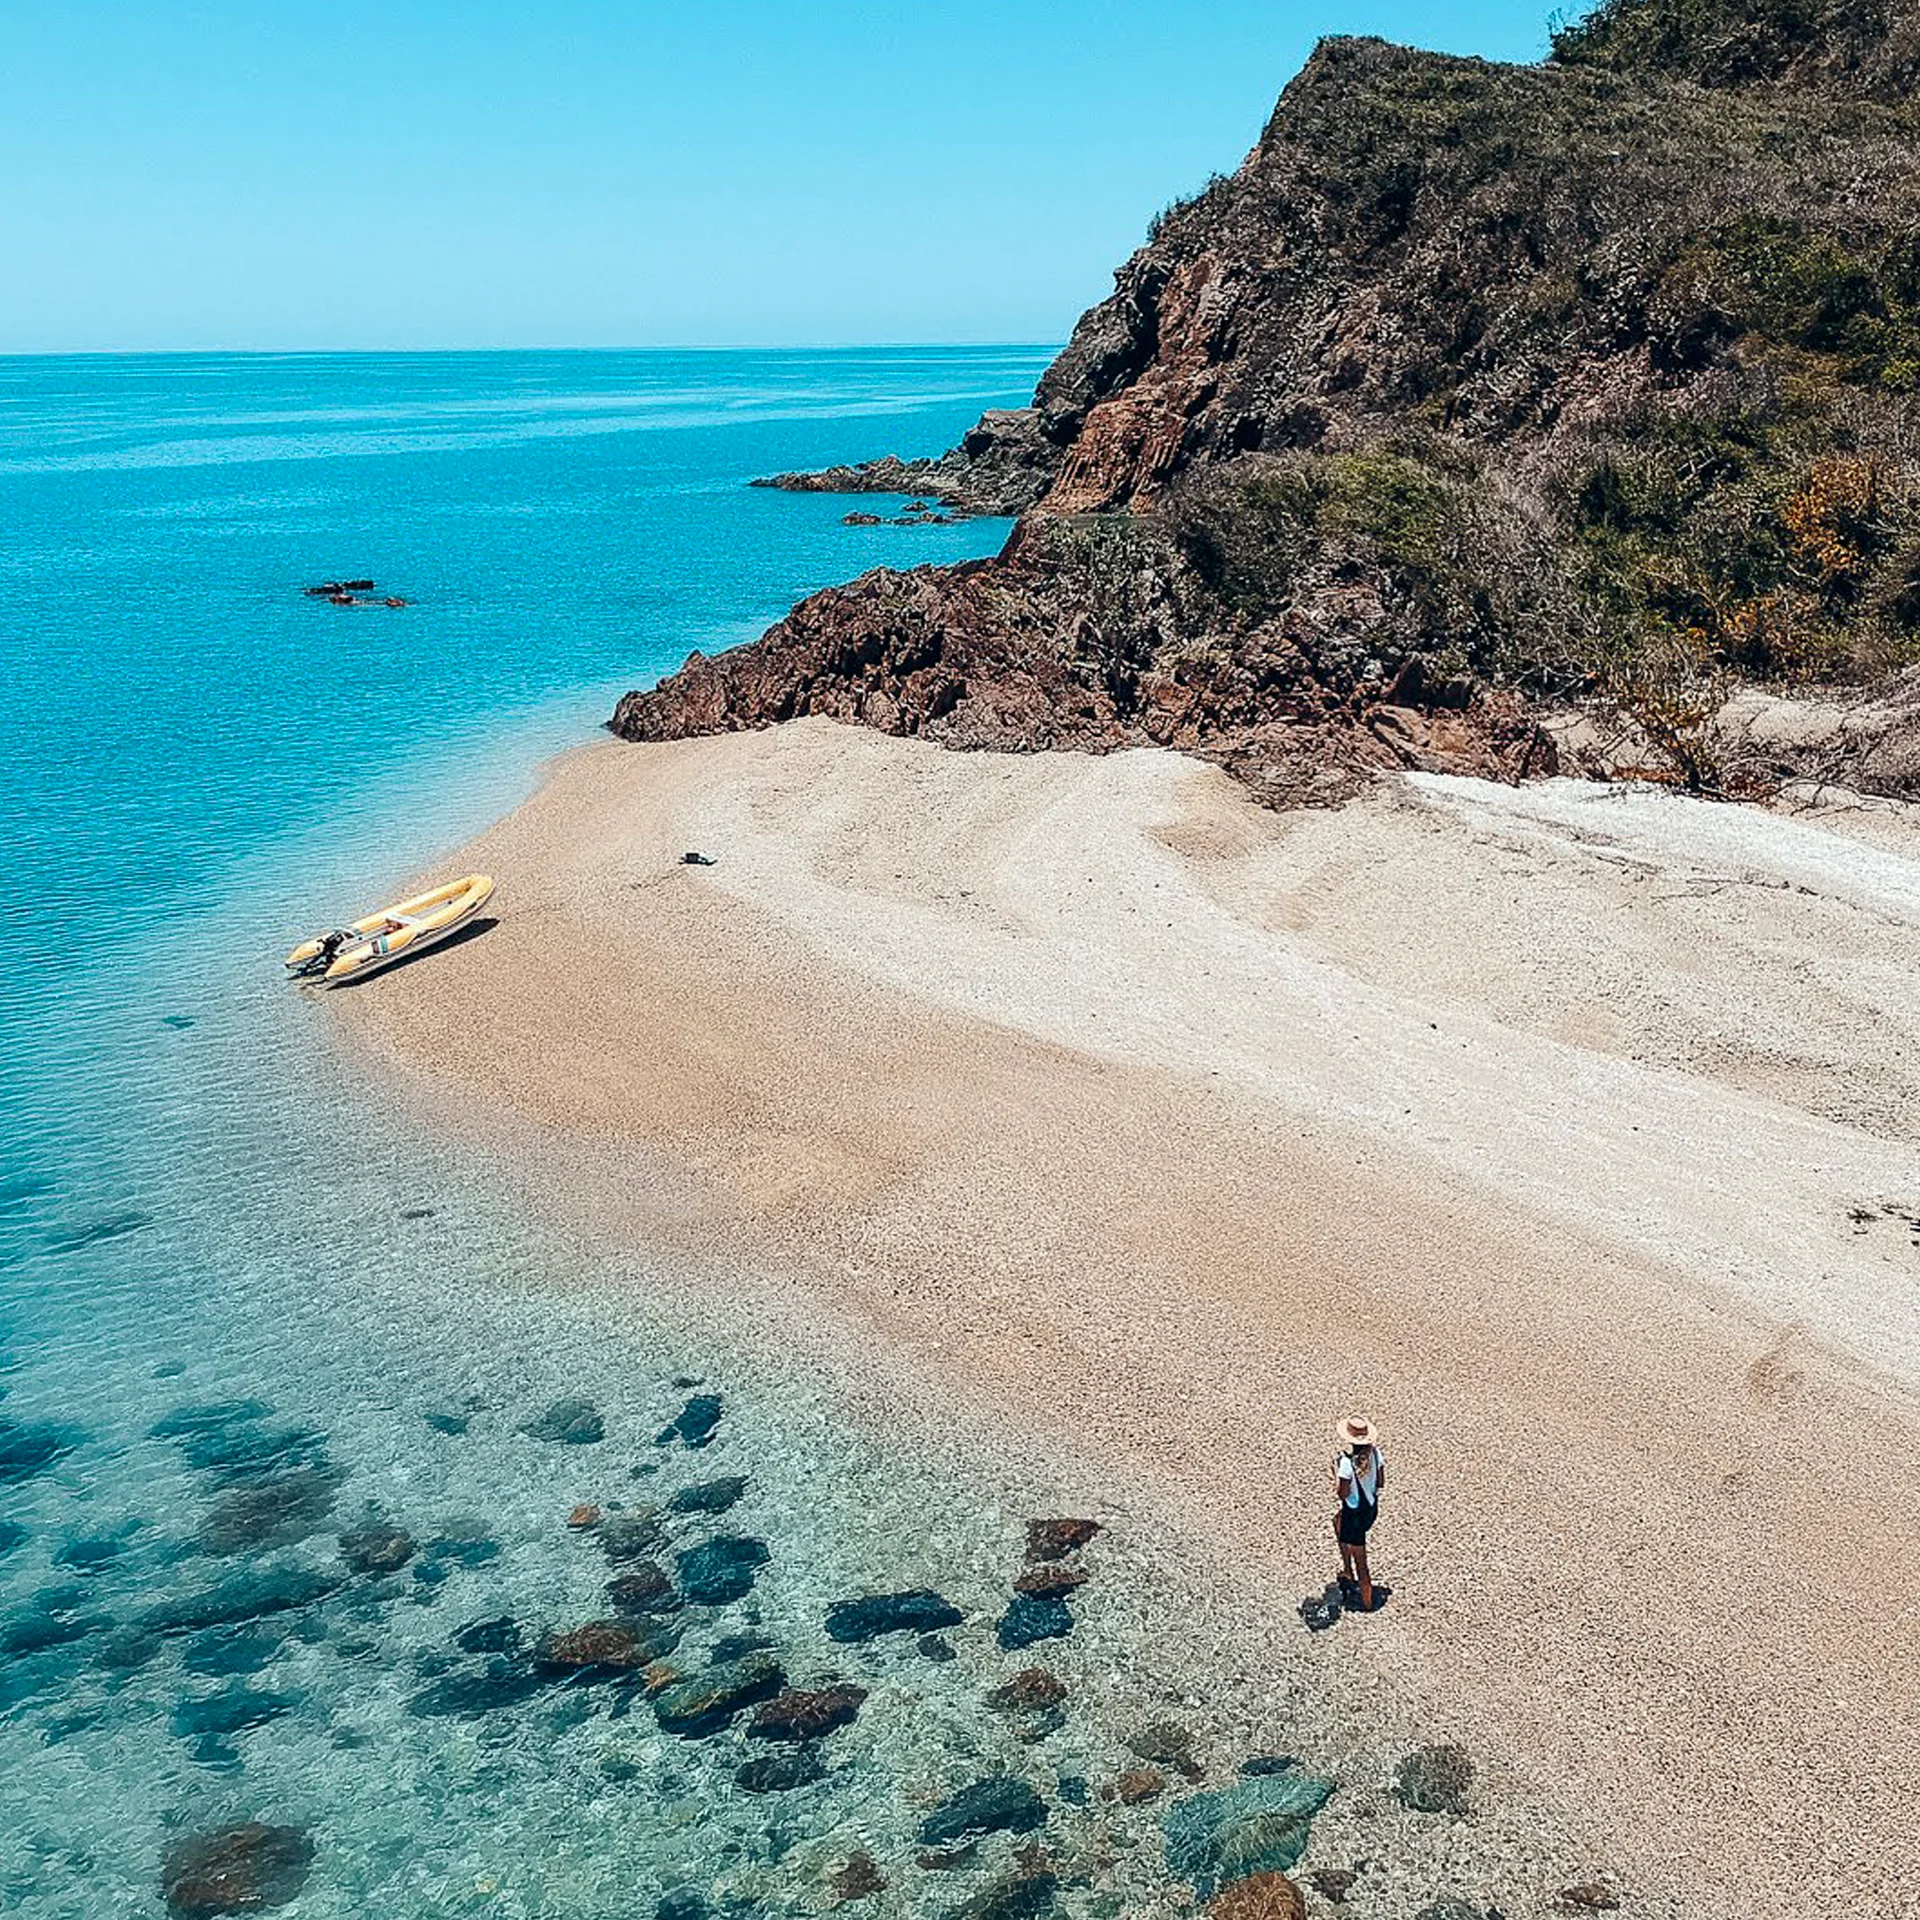 Segeln in Australien: Spaziergang an schönem Strand